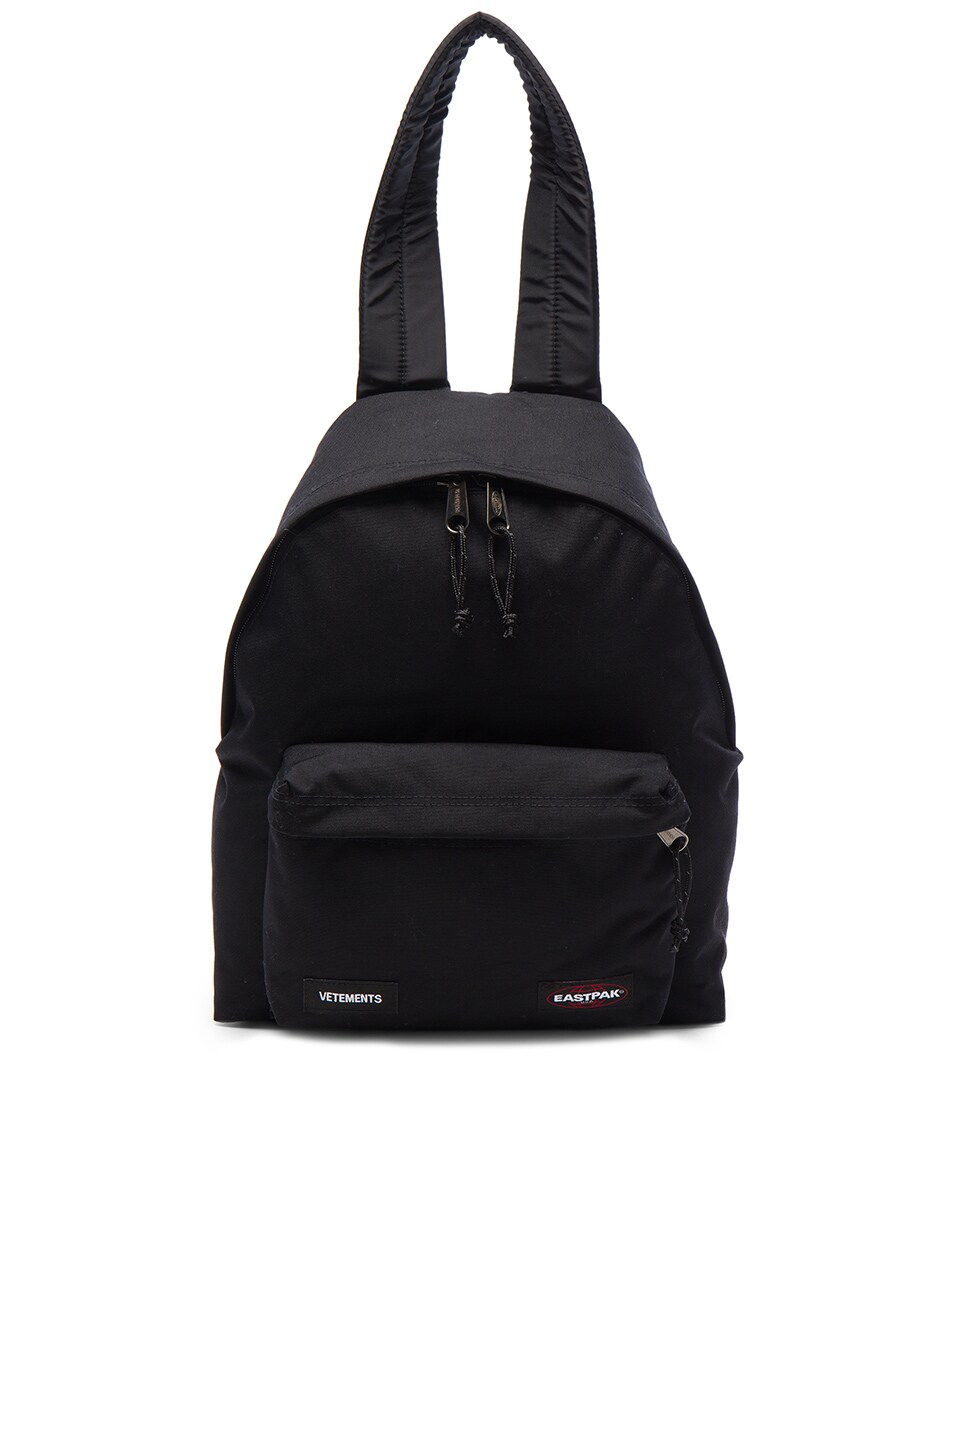 Image 1 of VETEMENTS x Eastpak Backpack in Black